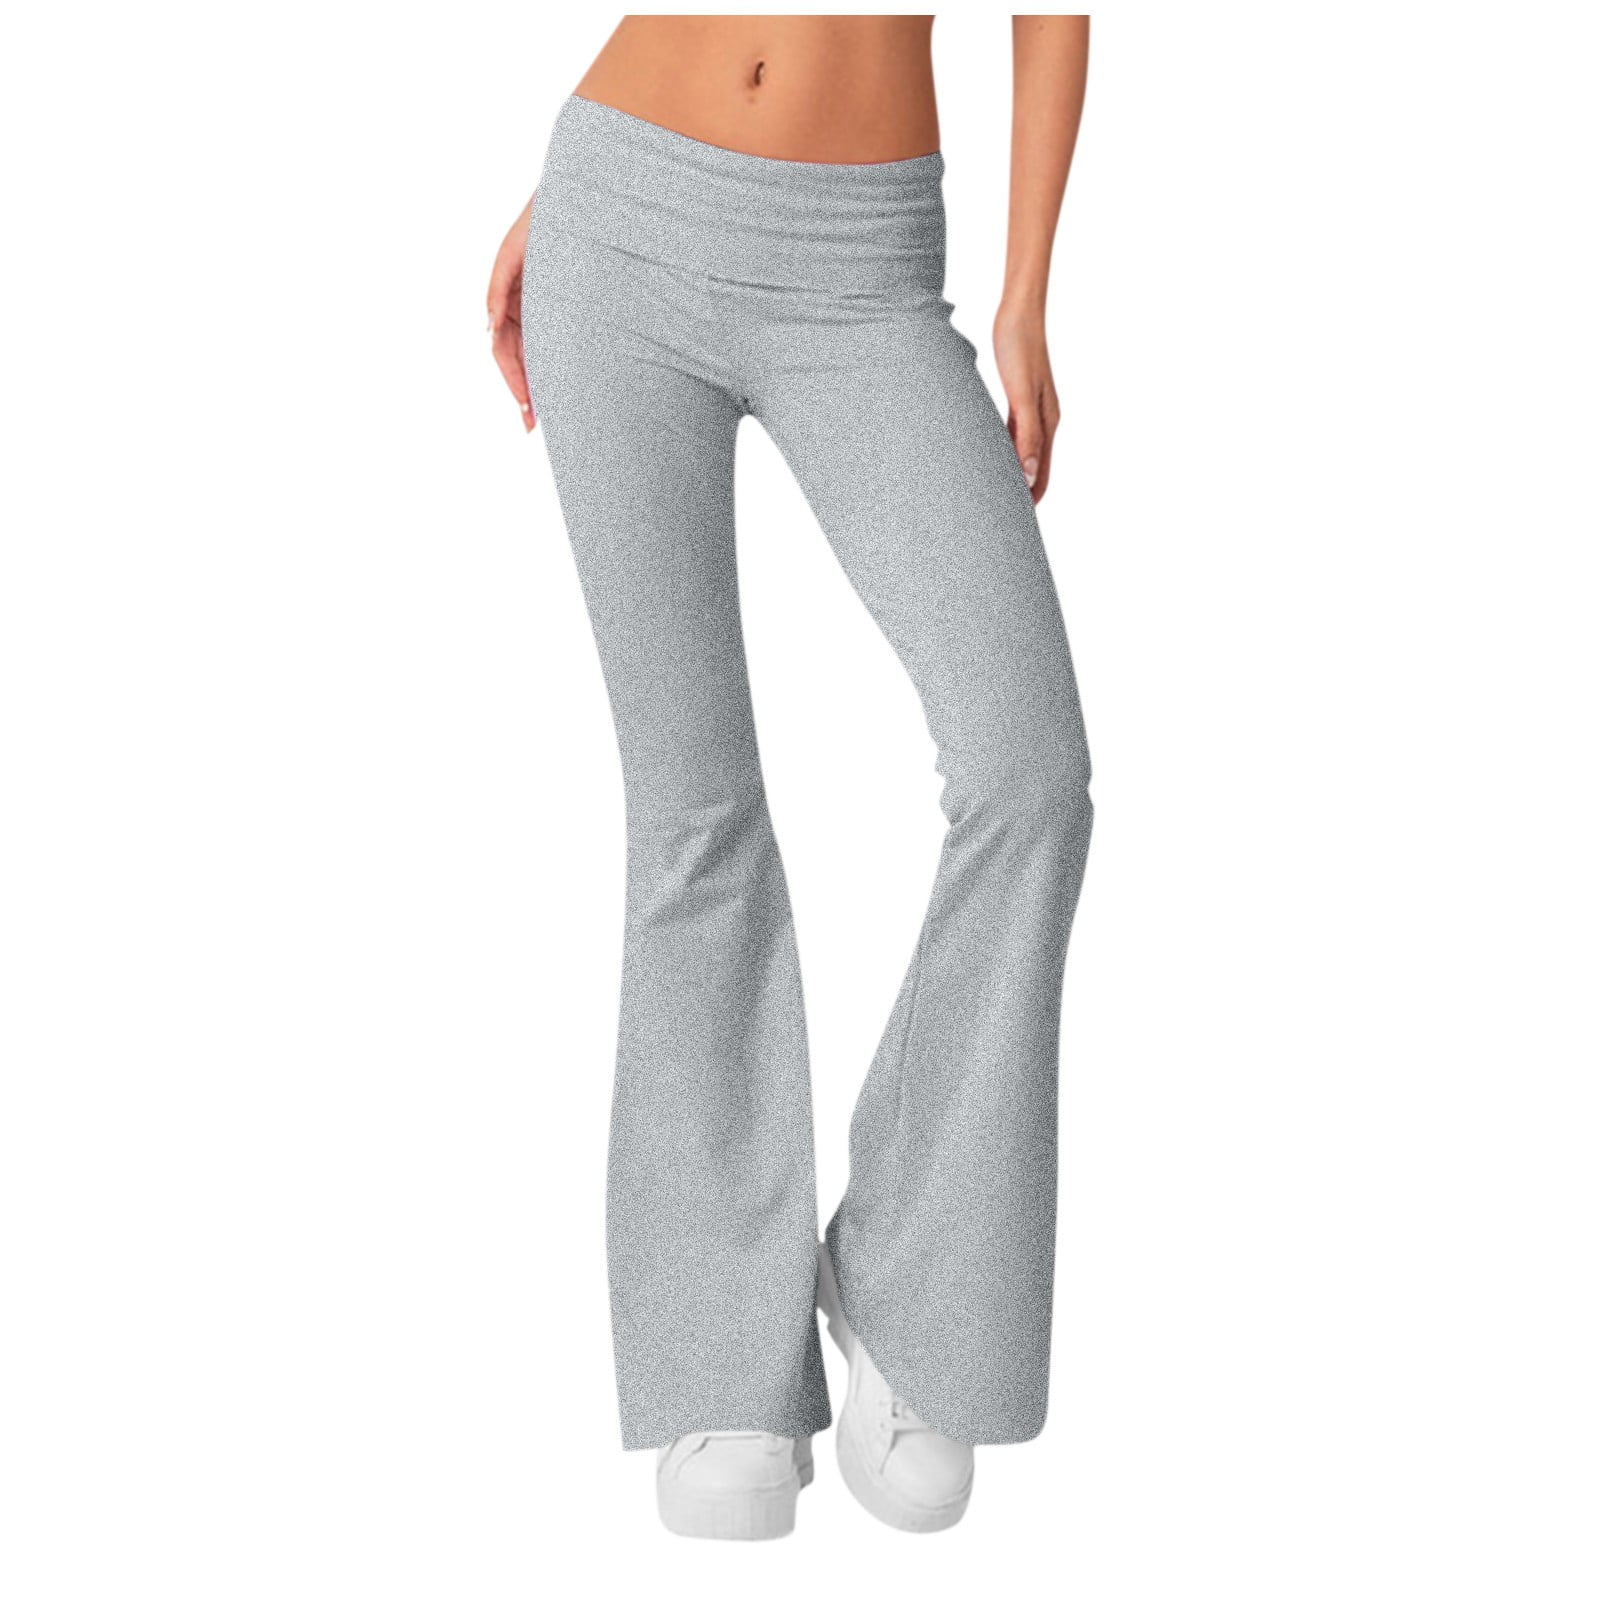 Bootcut yoga pants. Petite, dark grey and stretchy. - Depop